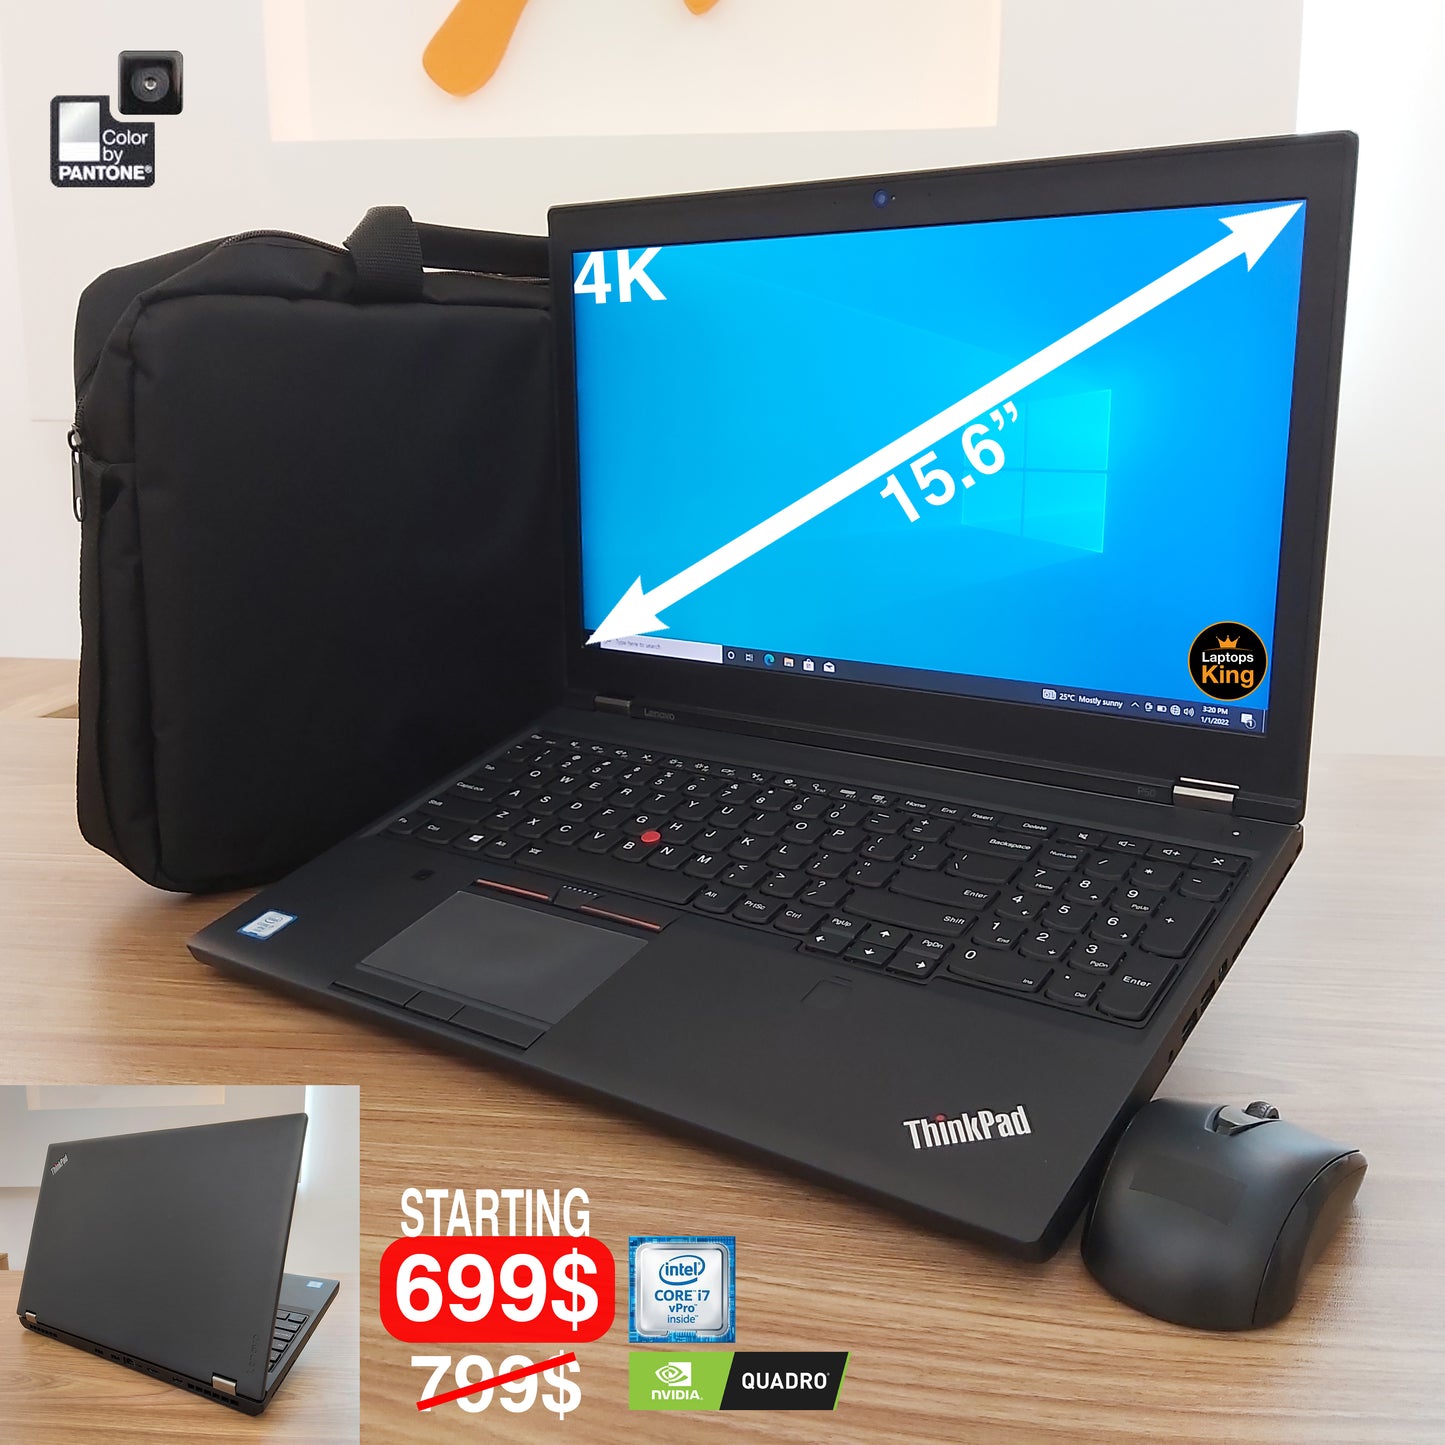 Lenovo ThinkPad P50 i7 Mobile Workstation Laptop (Open Box)